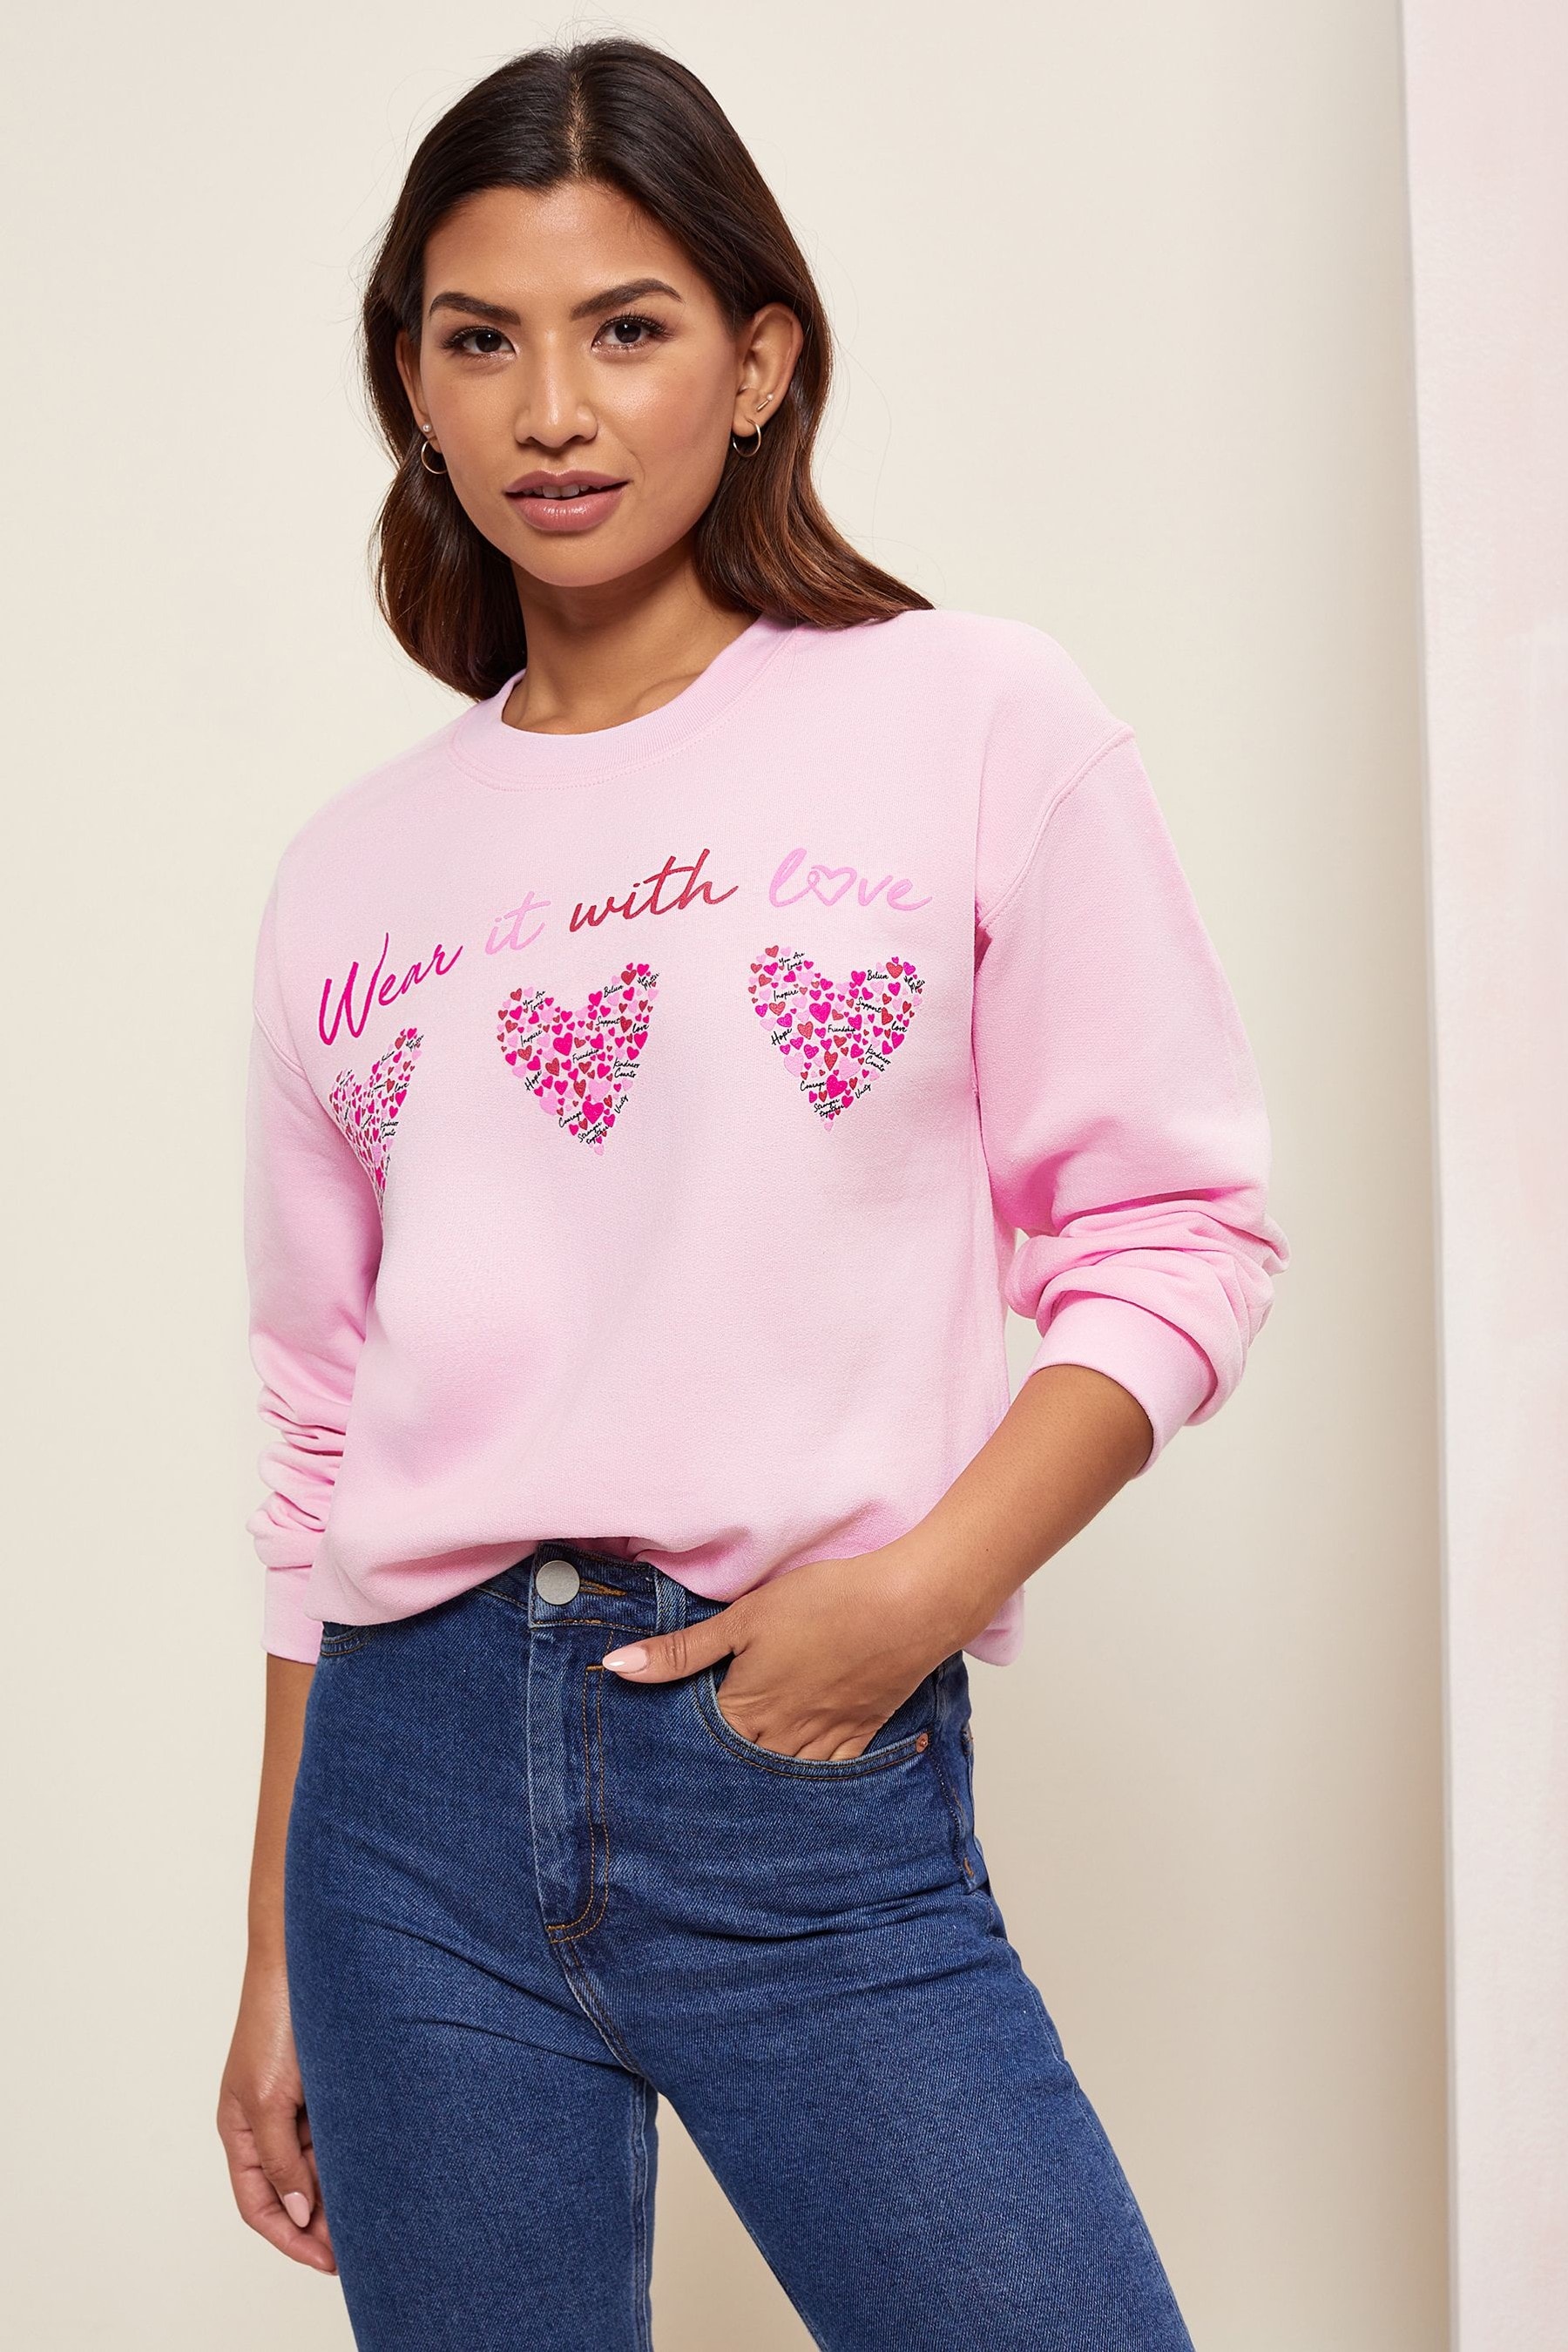 Buy Wear it with Love Pink Hearts Sweatshirt - Women's from the